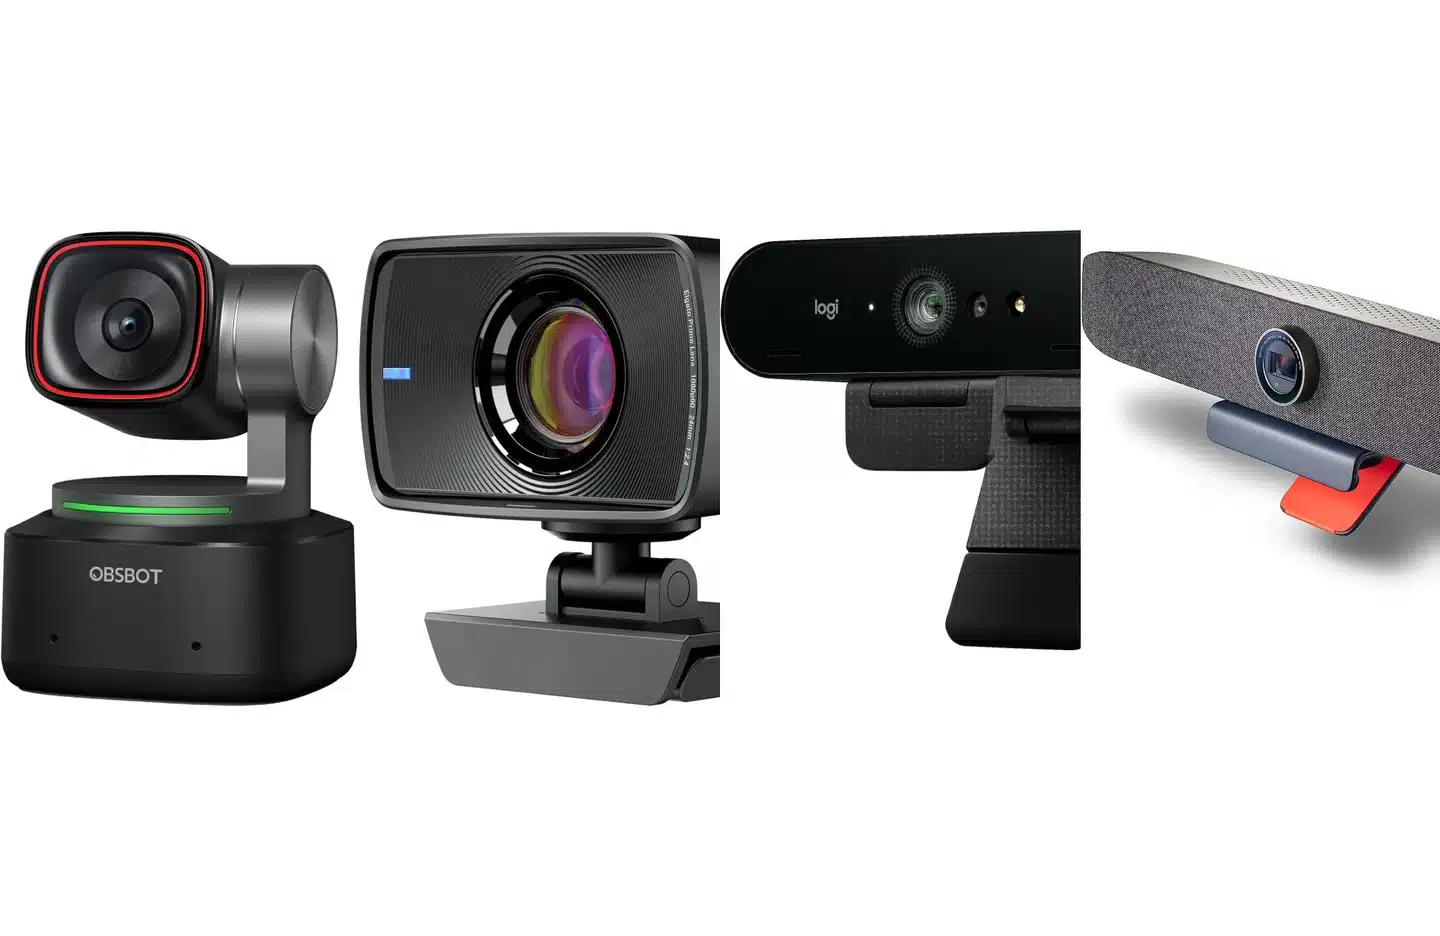 10 Best Webcams For Streaming